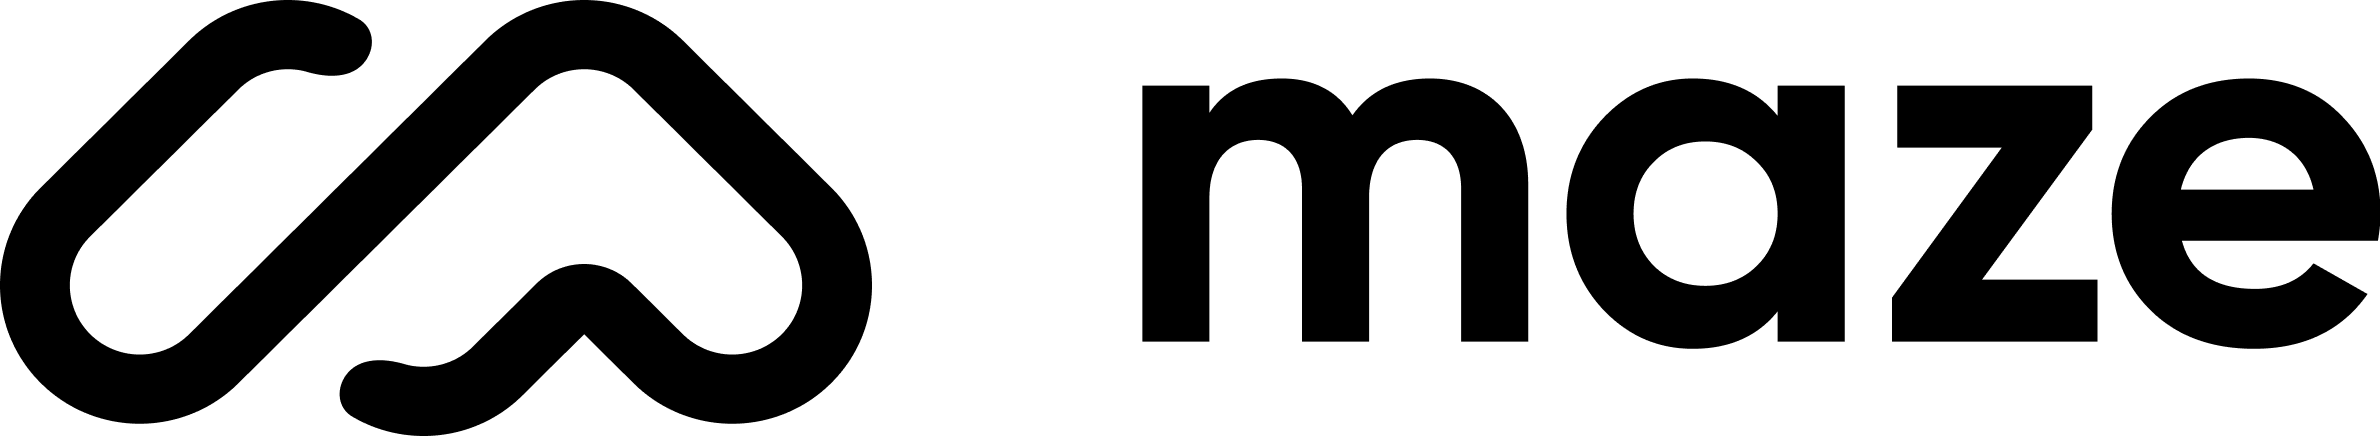 maze logo